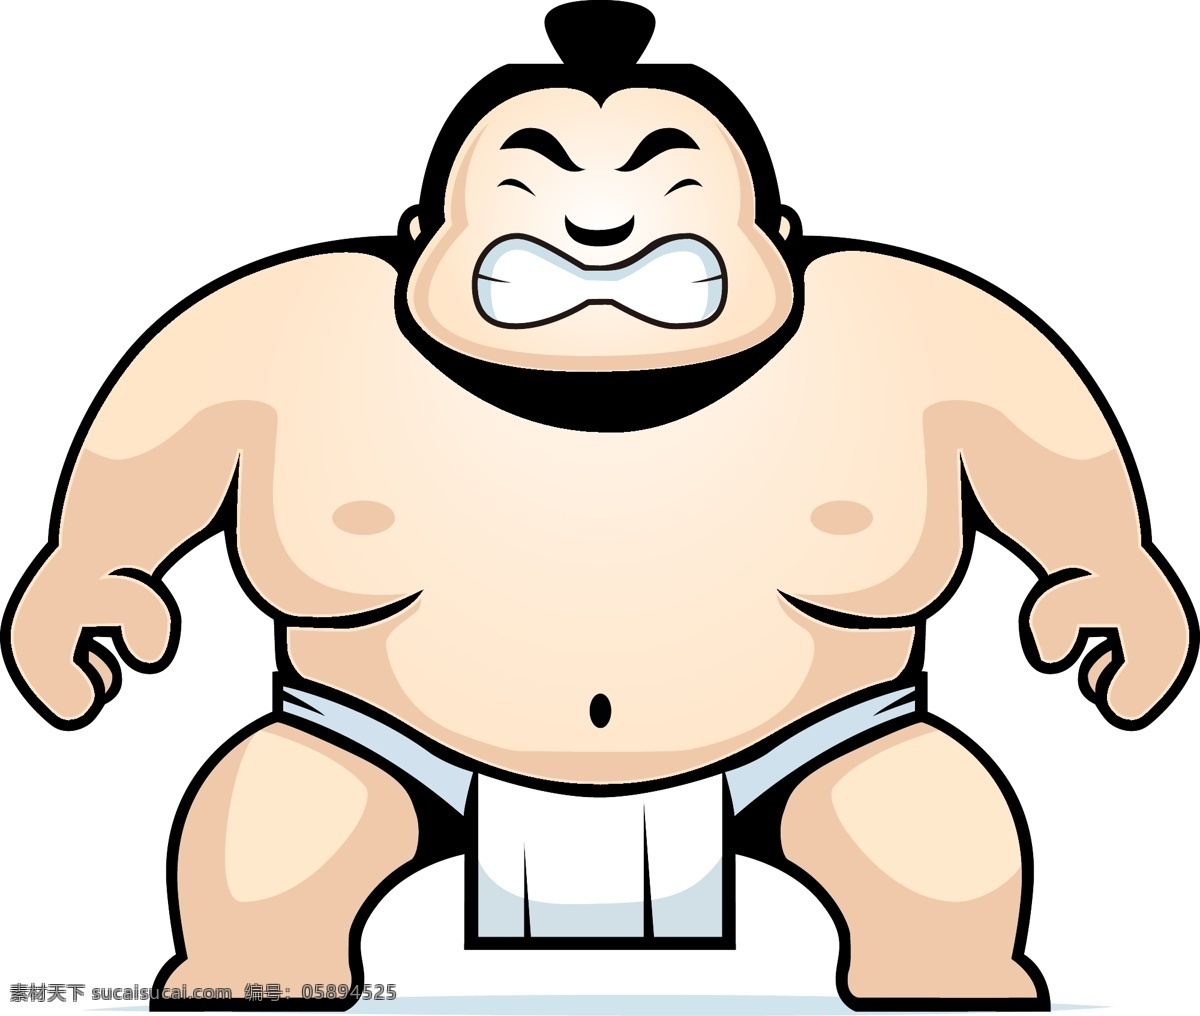 sumo 相扑标志图 相扑 图标 标志 日本 矢量商标 标识标志图标 矢量